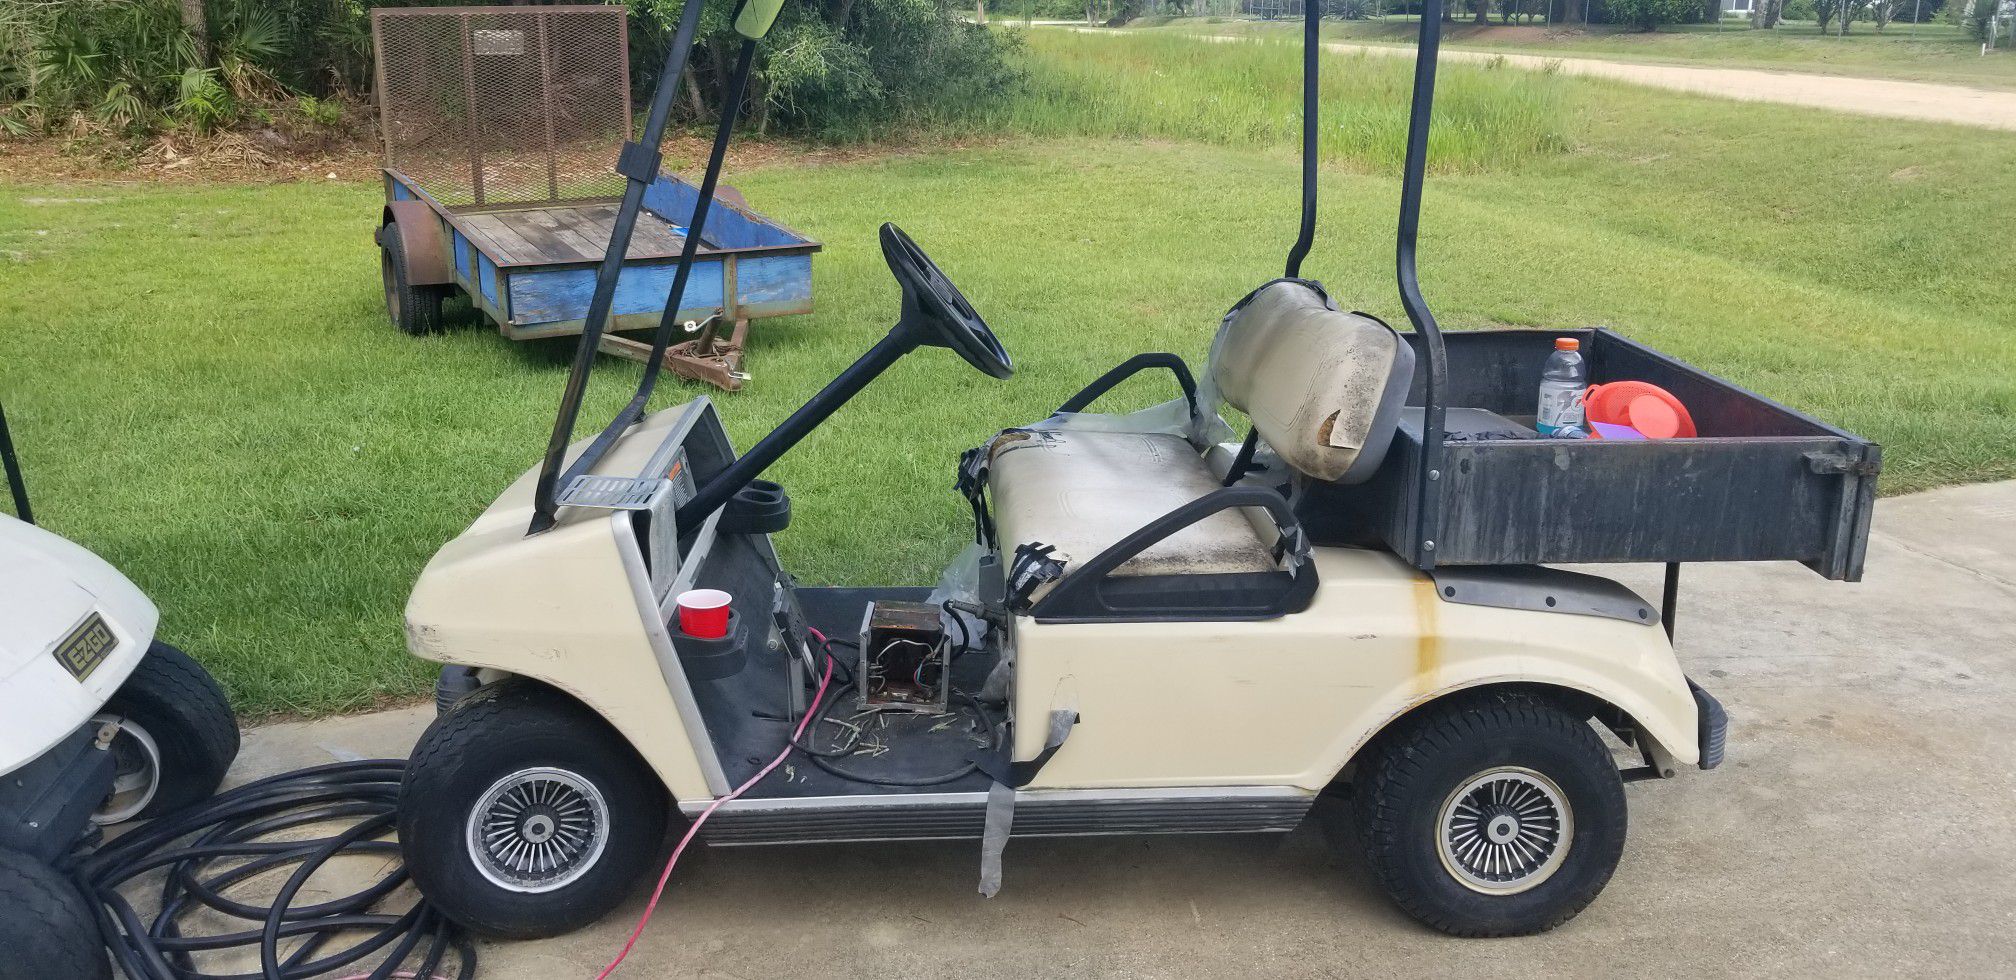 I have 2 golf carts